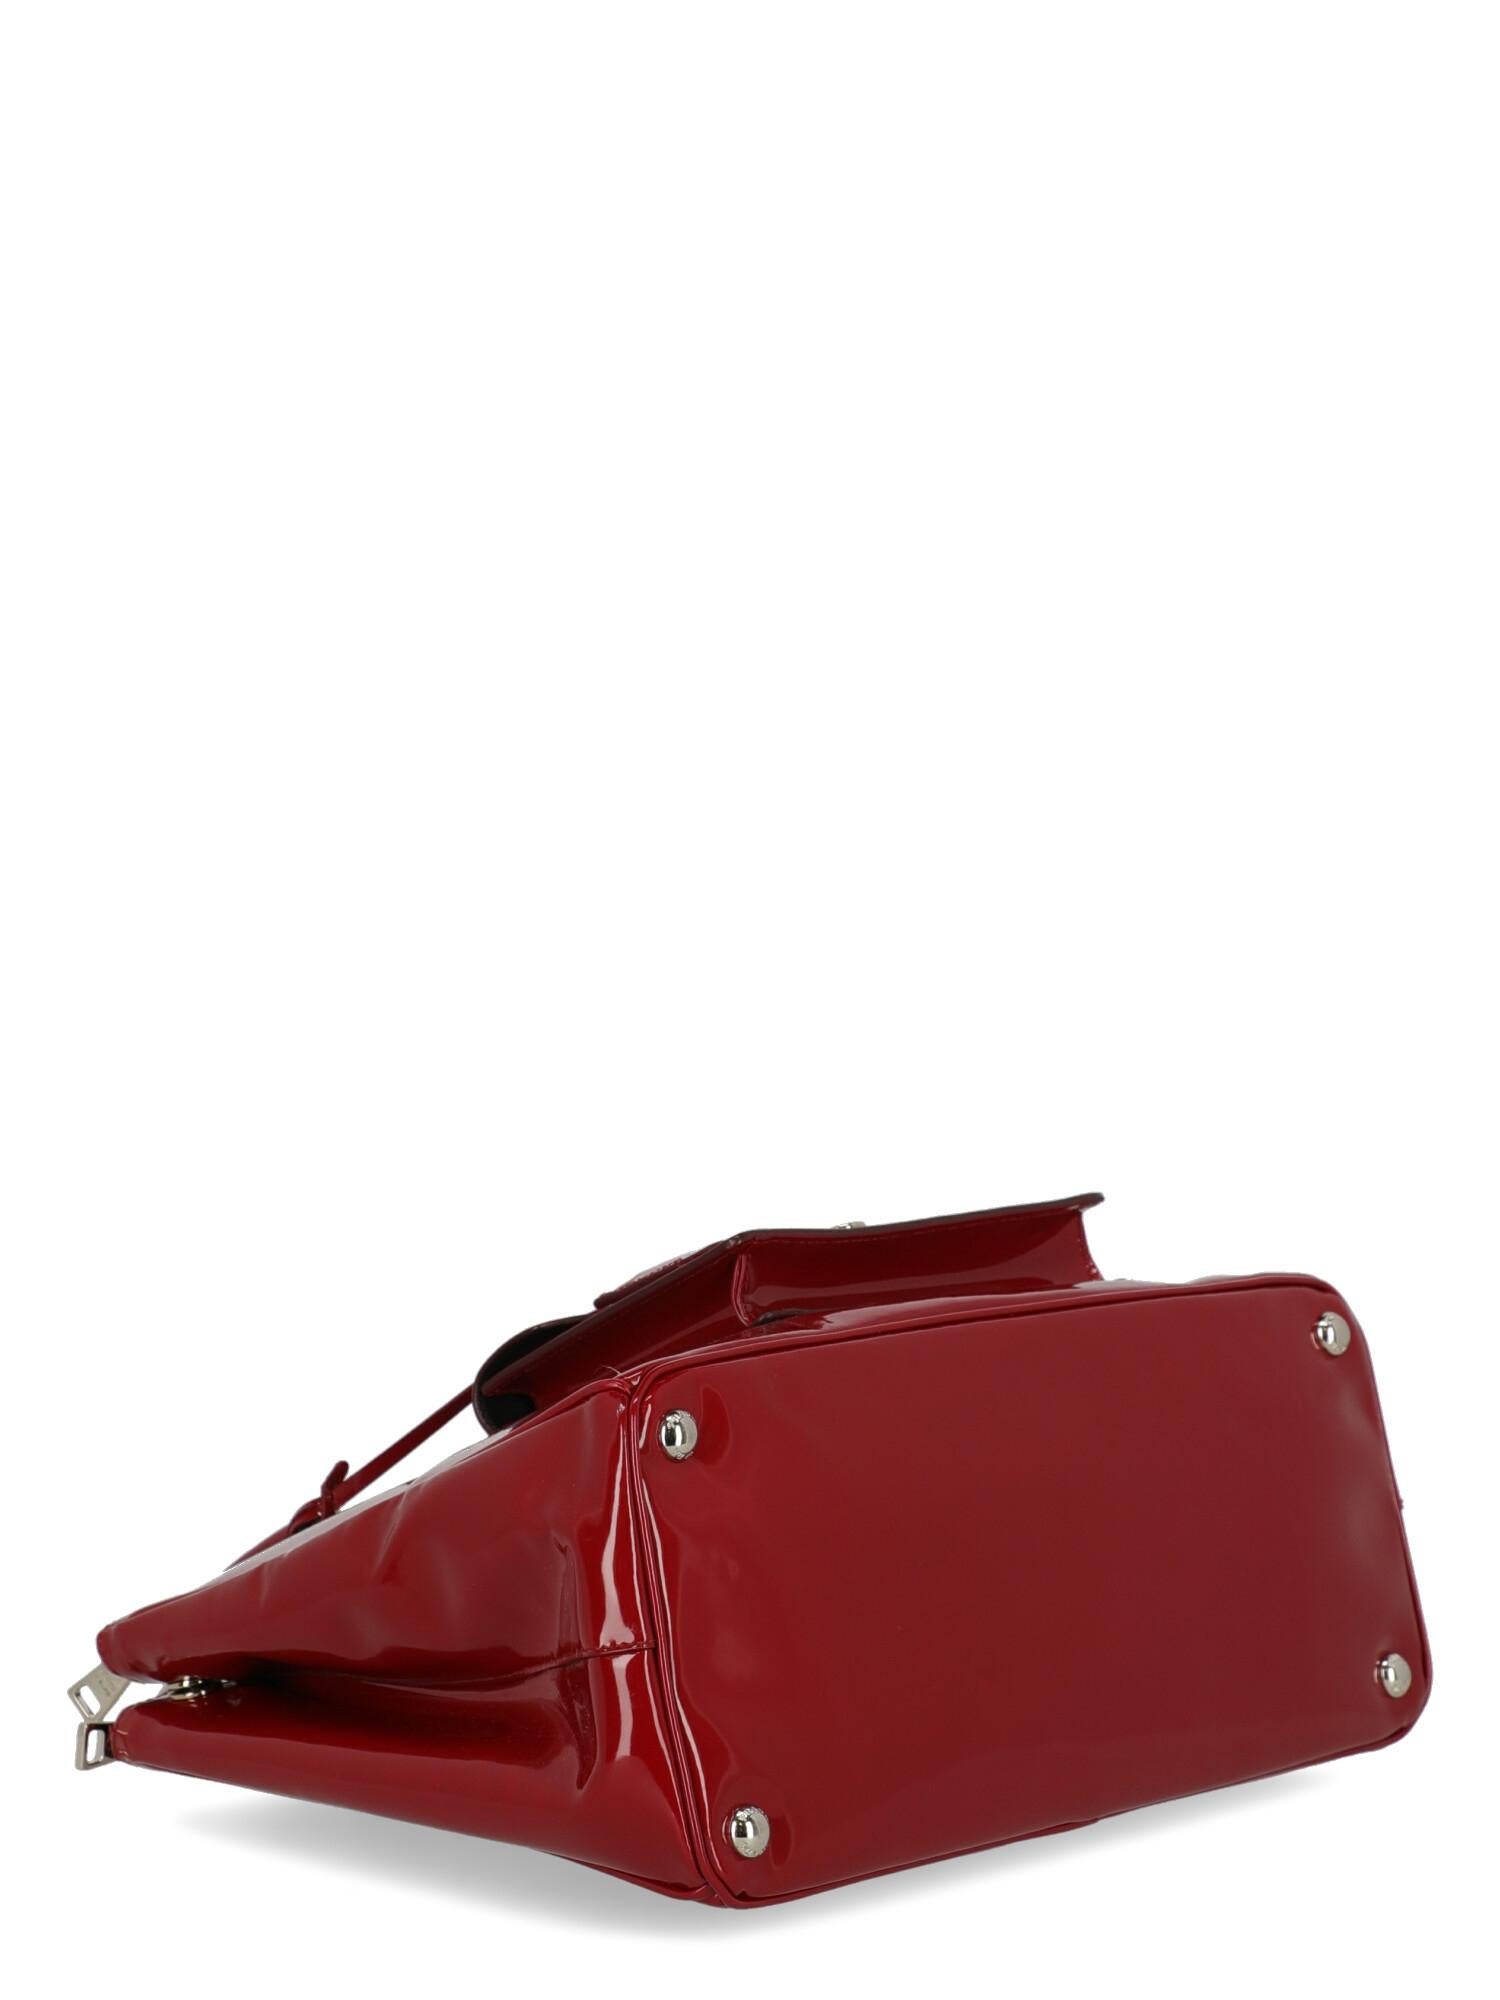 Prada Woman Handbag  Red Leather 1